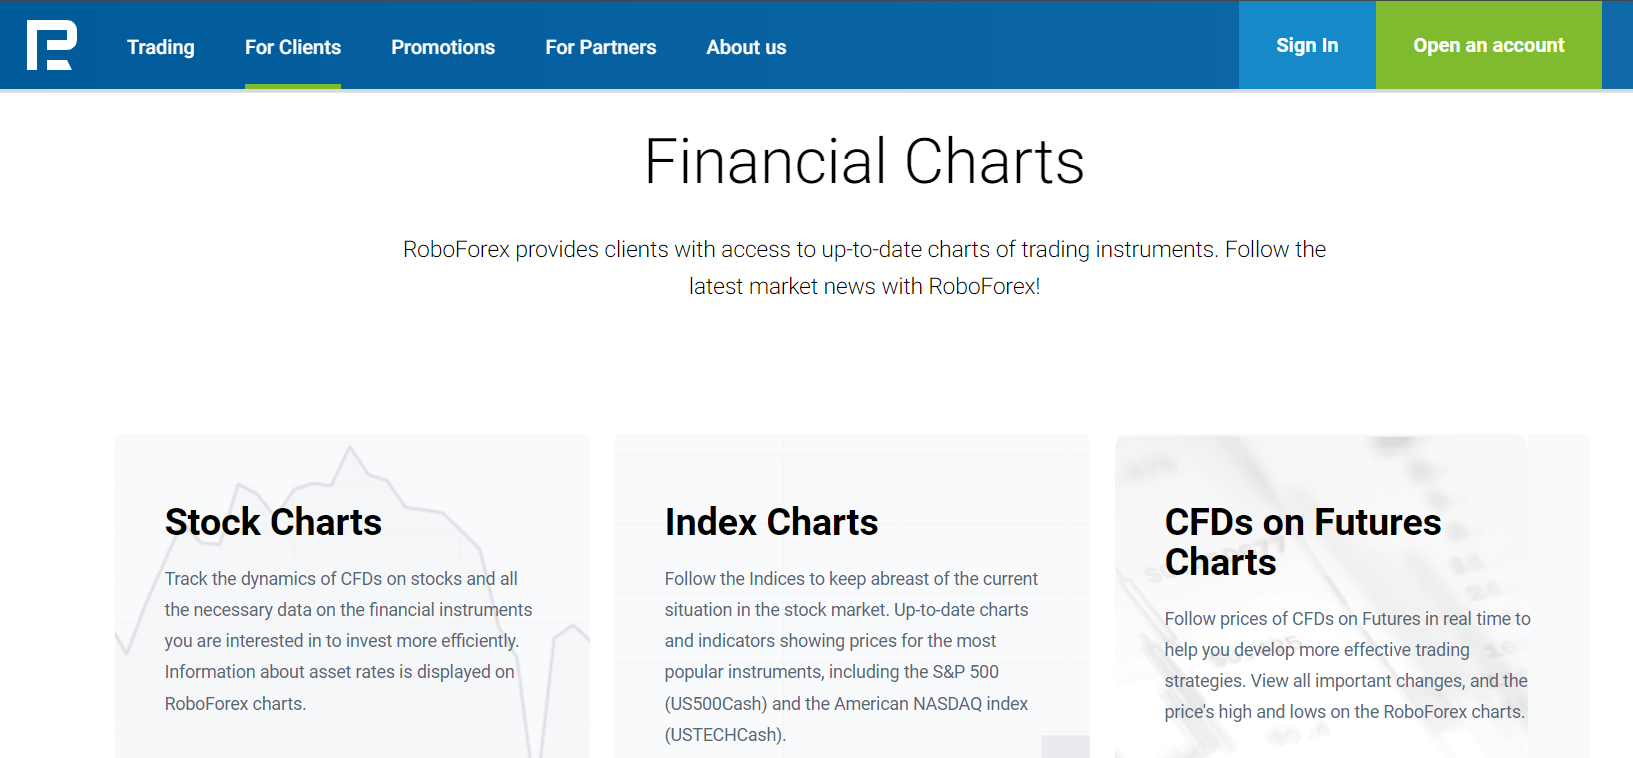 Useful tools - Financial charts